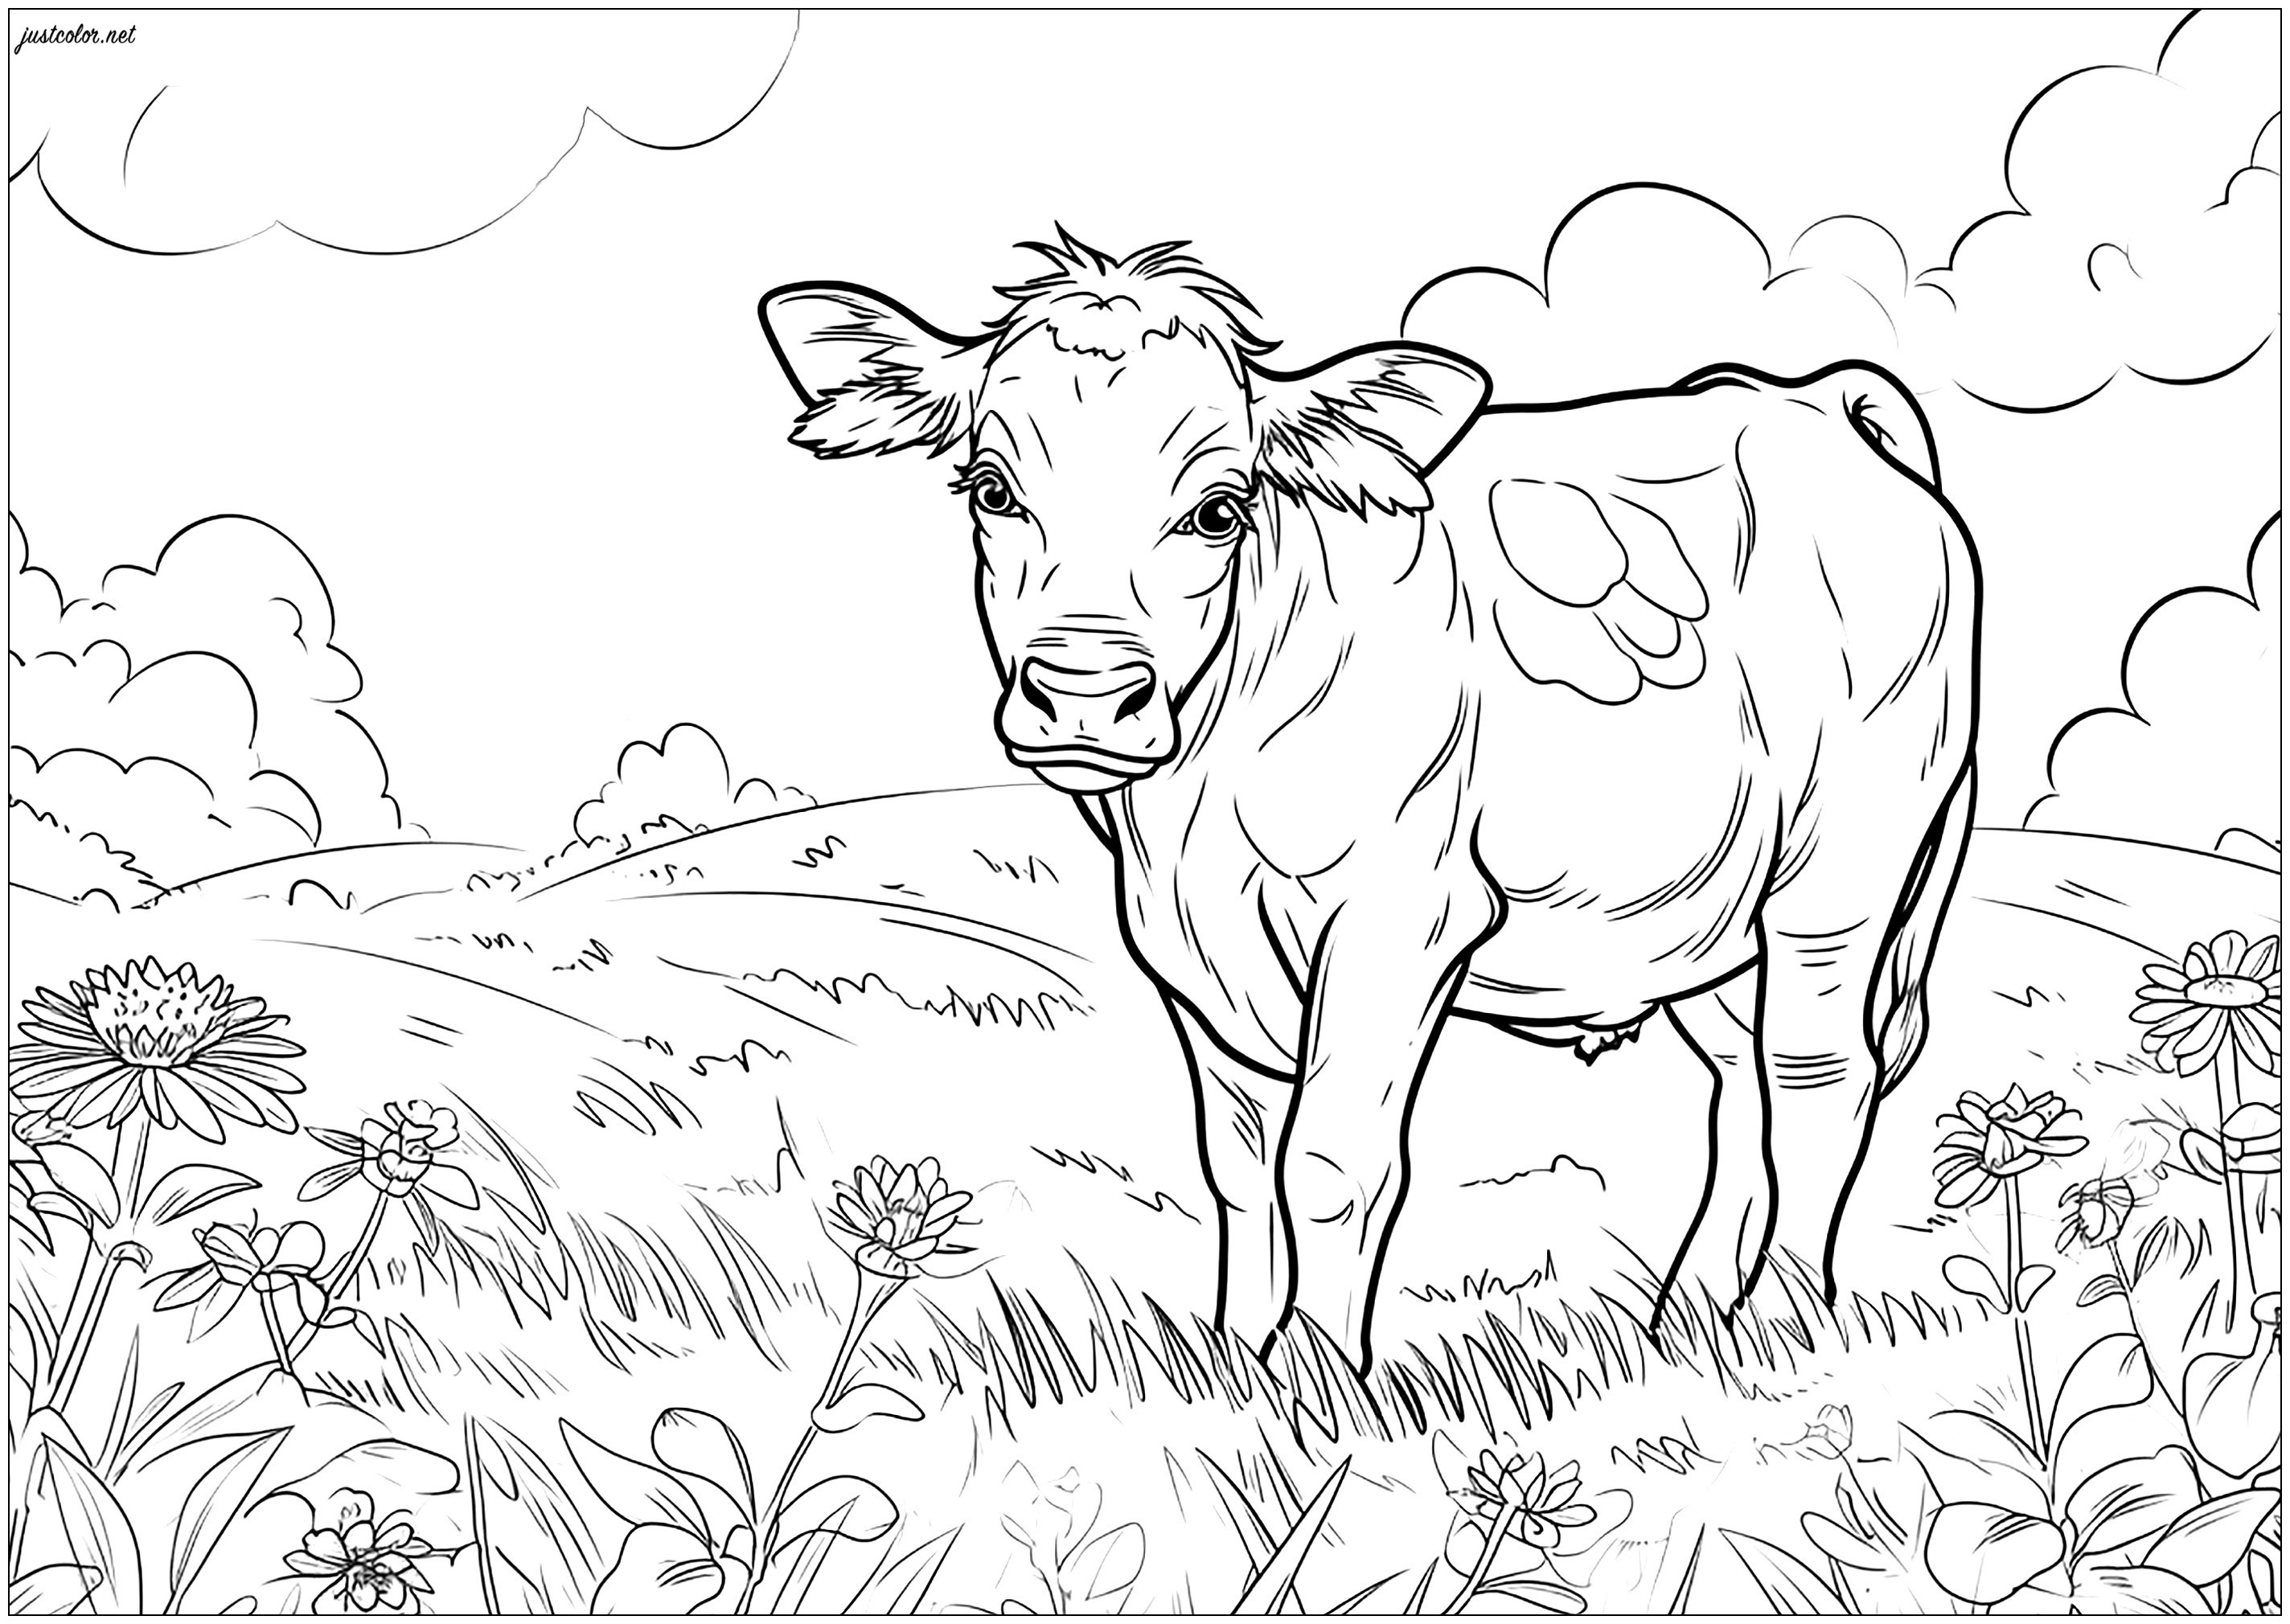 Kuh auf einem Feld - 3